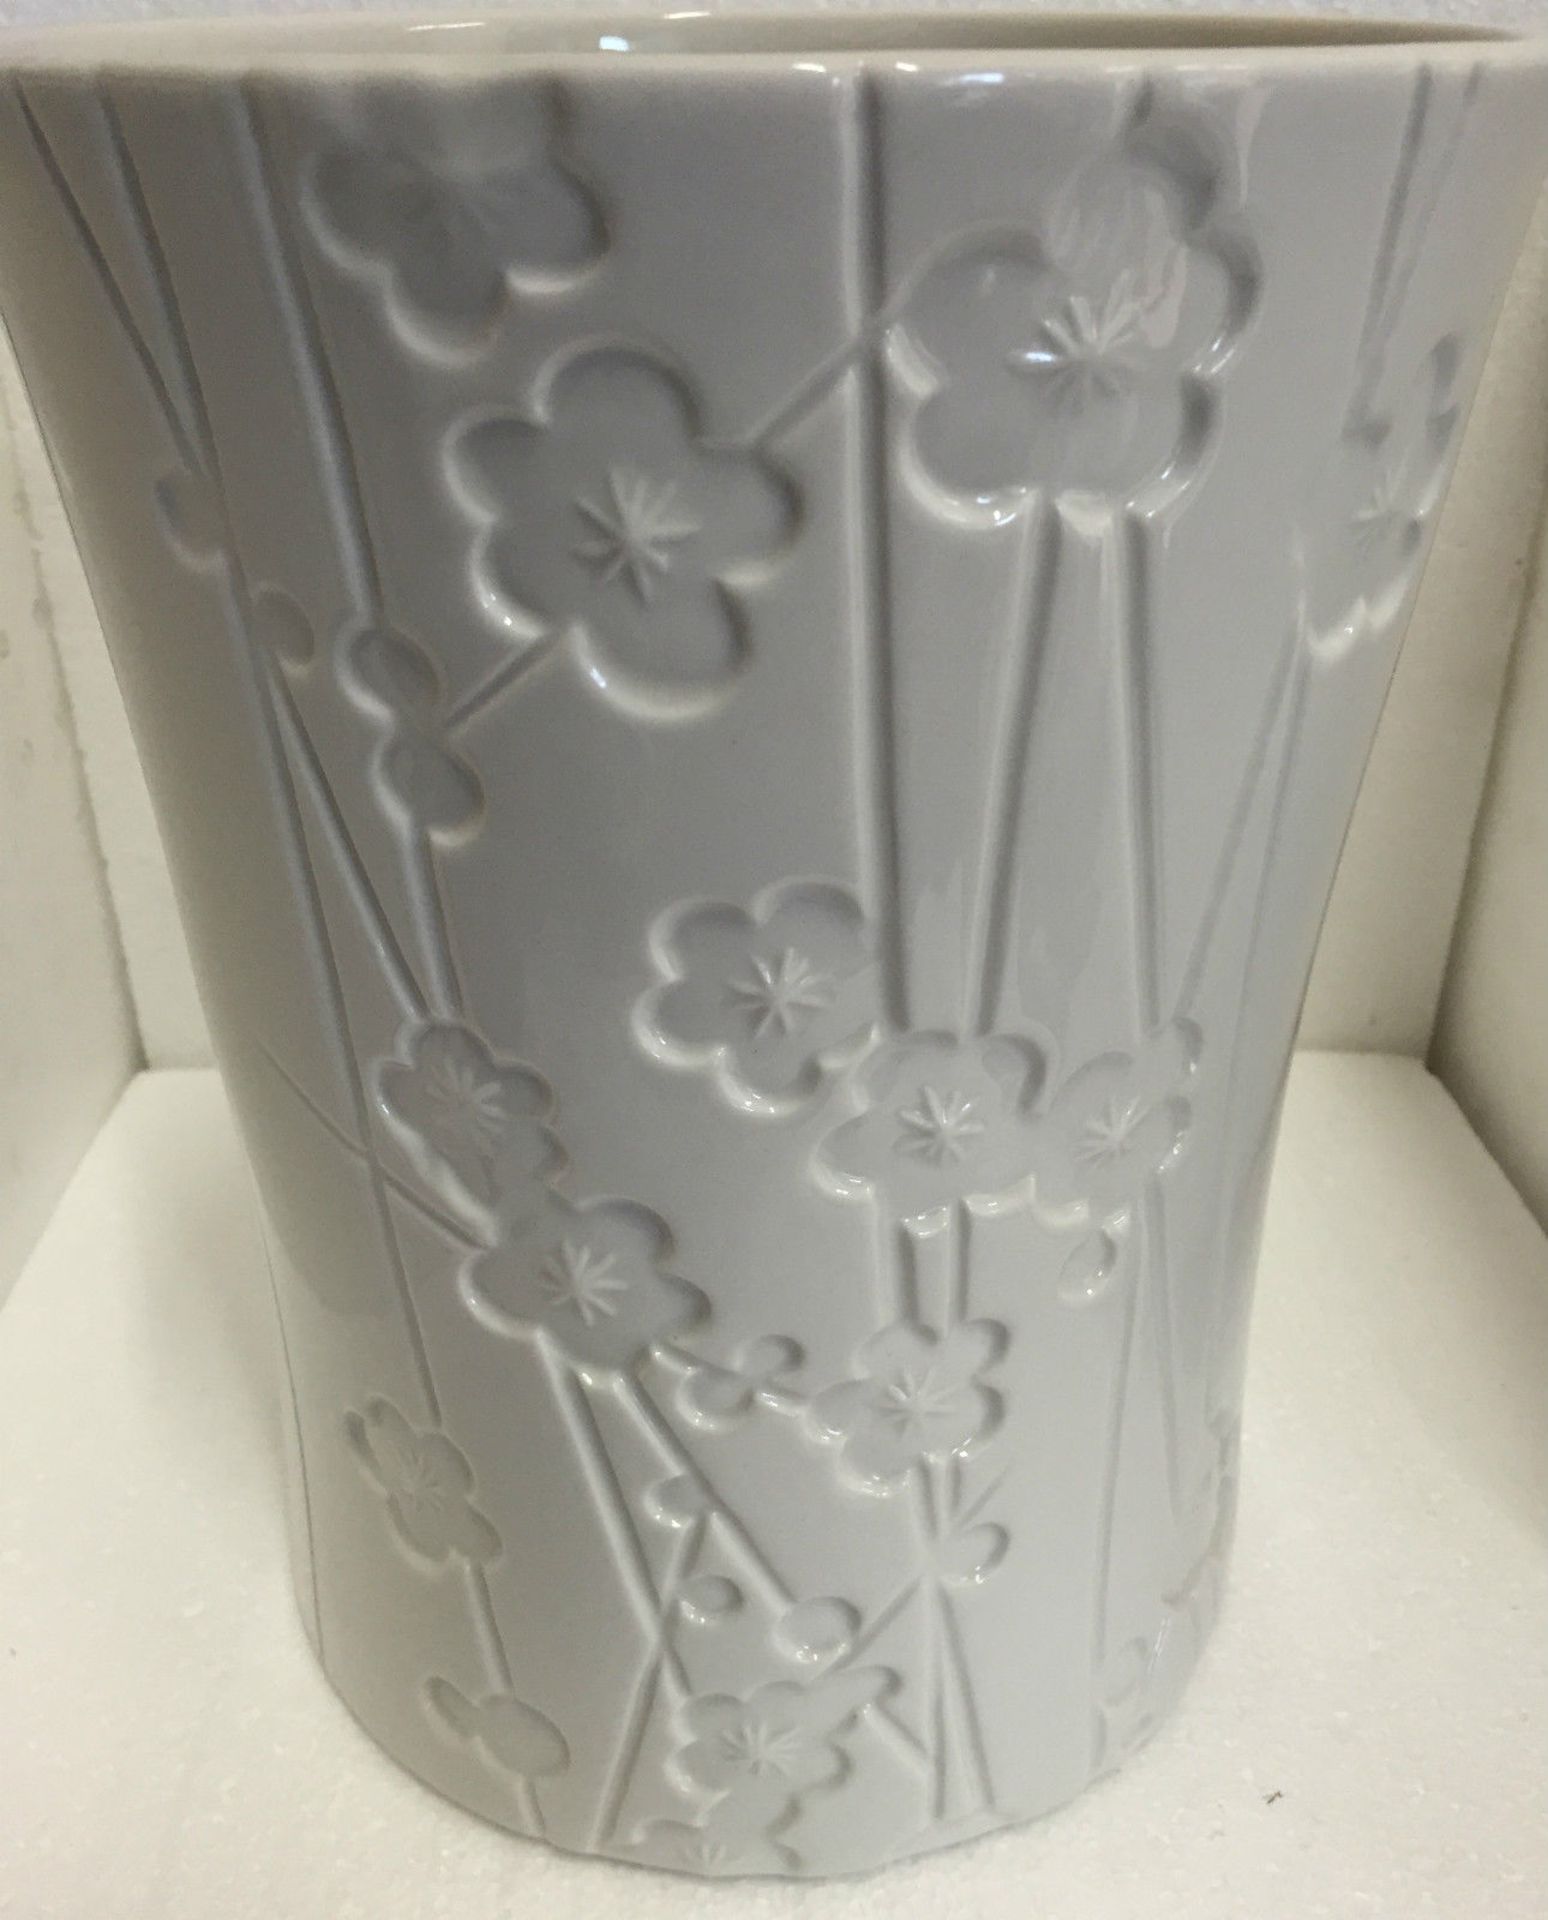 50 X Trash Bin Garbage Can Bathroom Modern White Ceramic & Black inlay flowers Macy's - Image 3 of 3